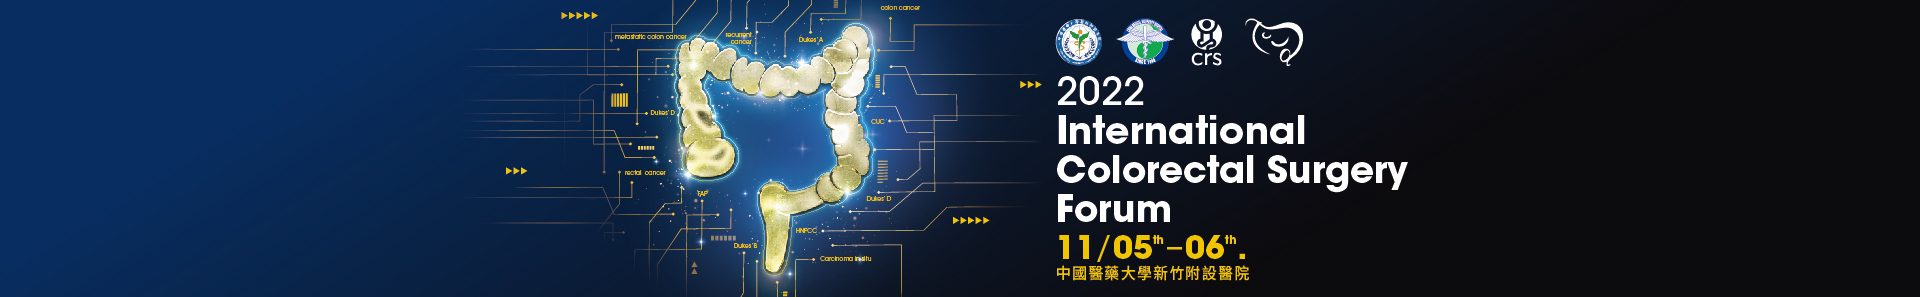 2022 International Colorectal Surgery Forum Date：November 5-6, 2022 Venue: China Medical University Hsinchu Hospital, Taiwan